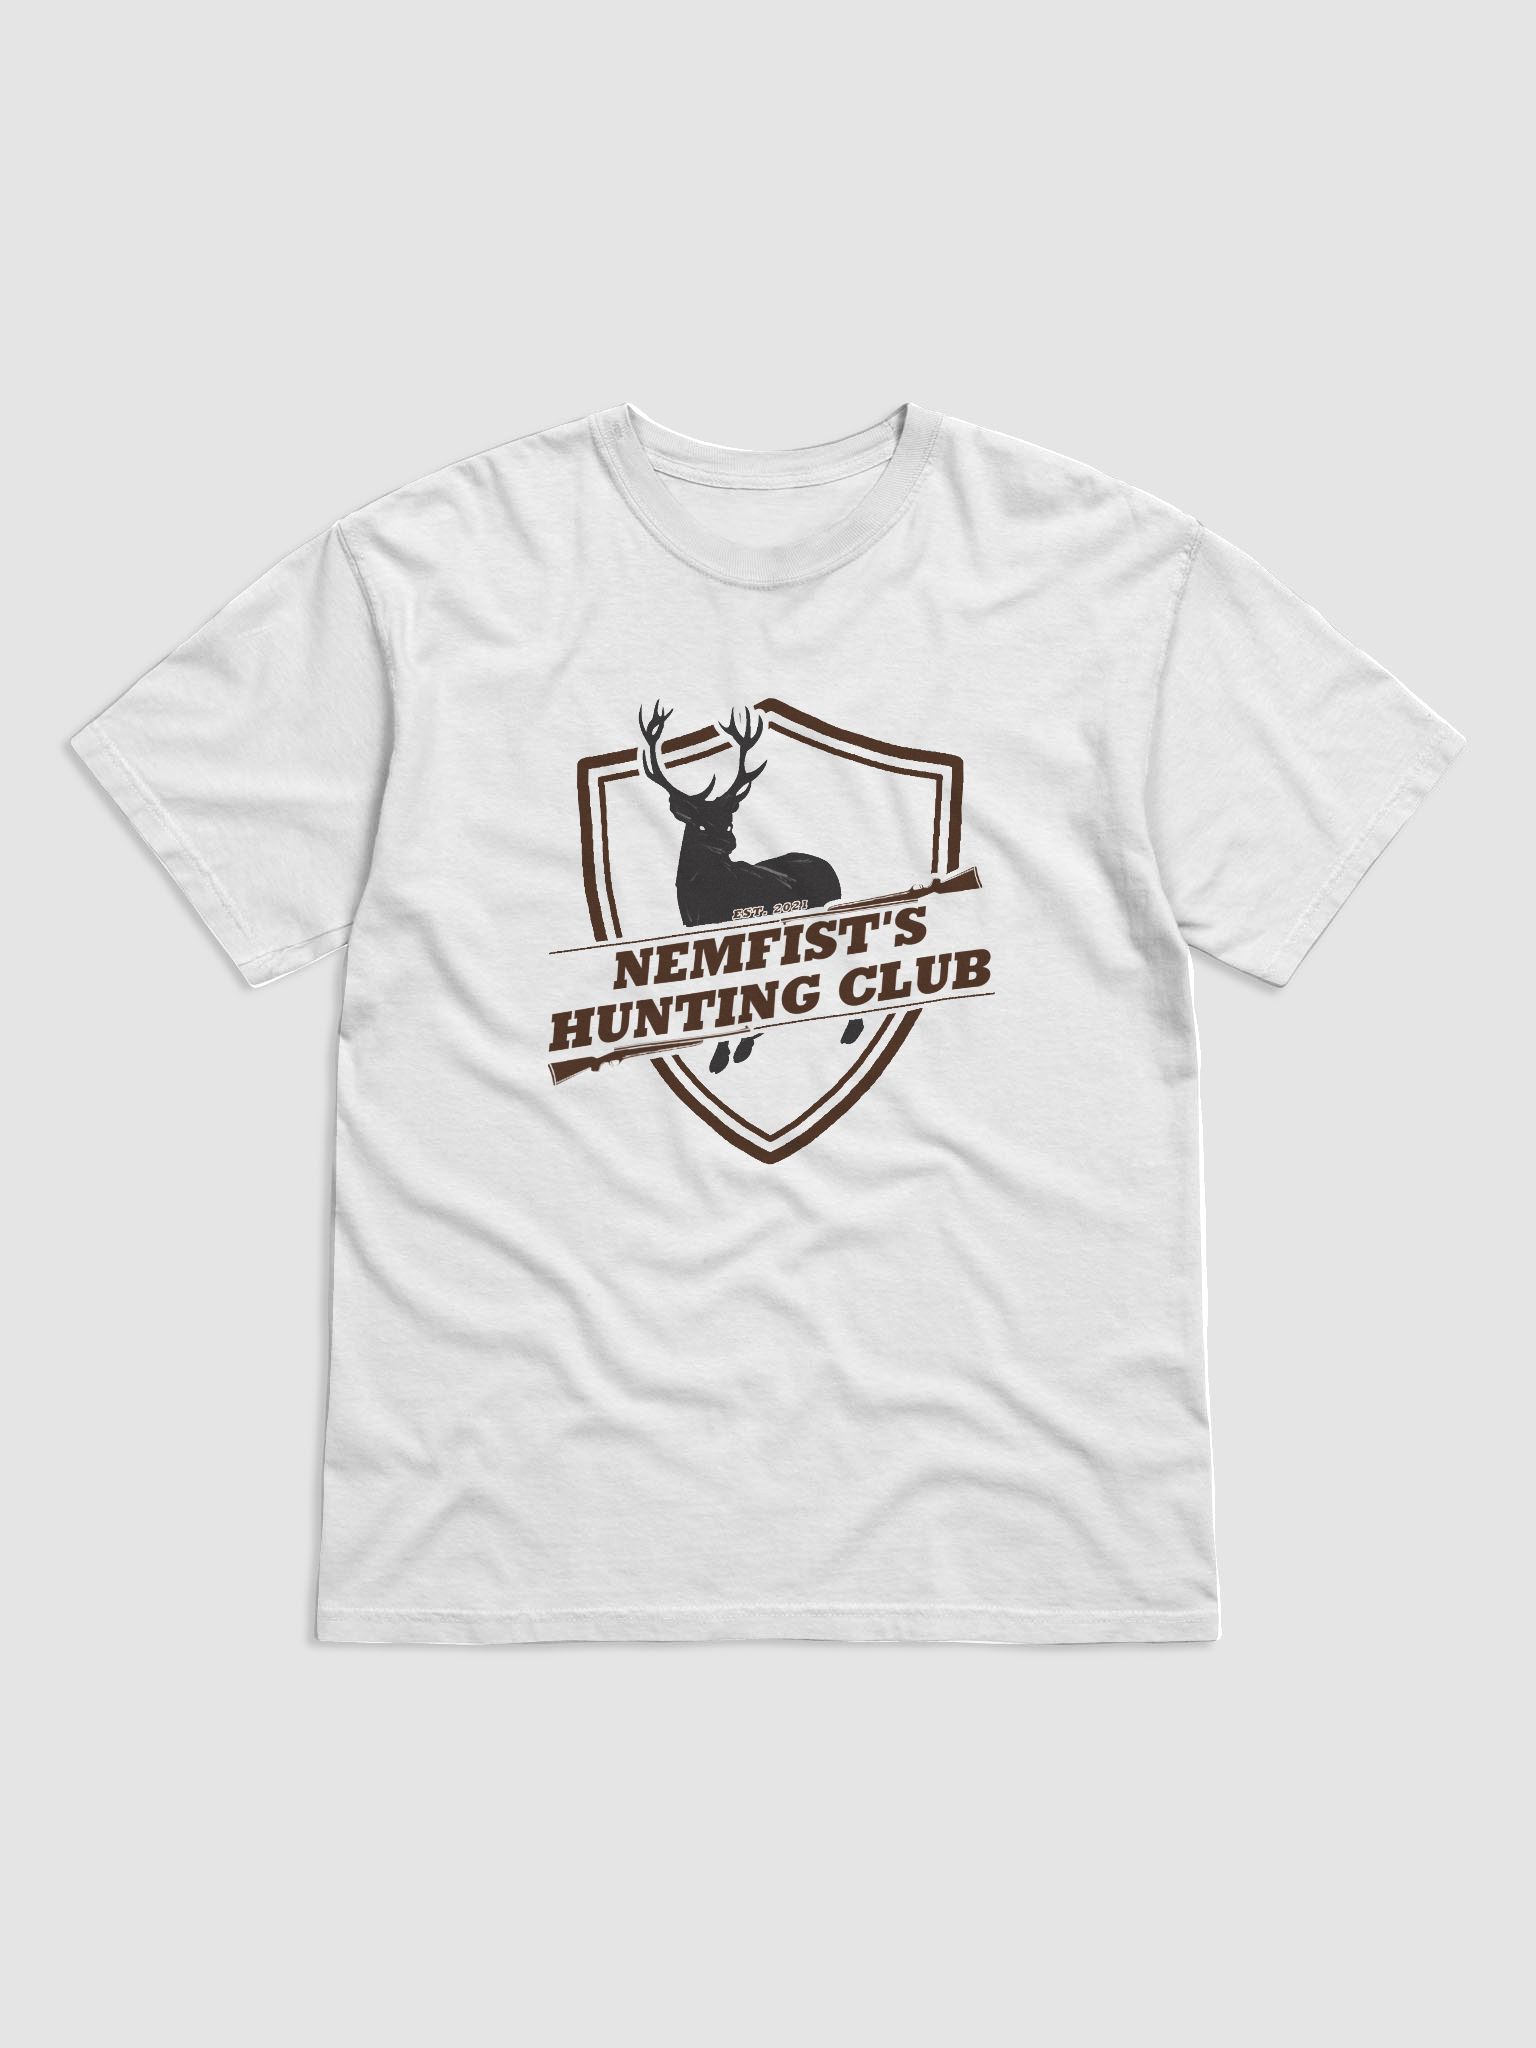 Rahmenlos Hunting Club T-shirt (German version only)